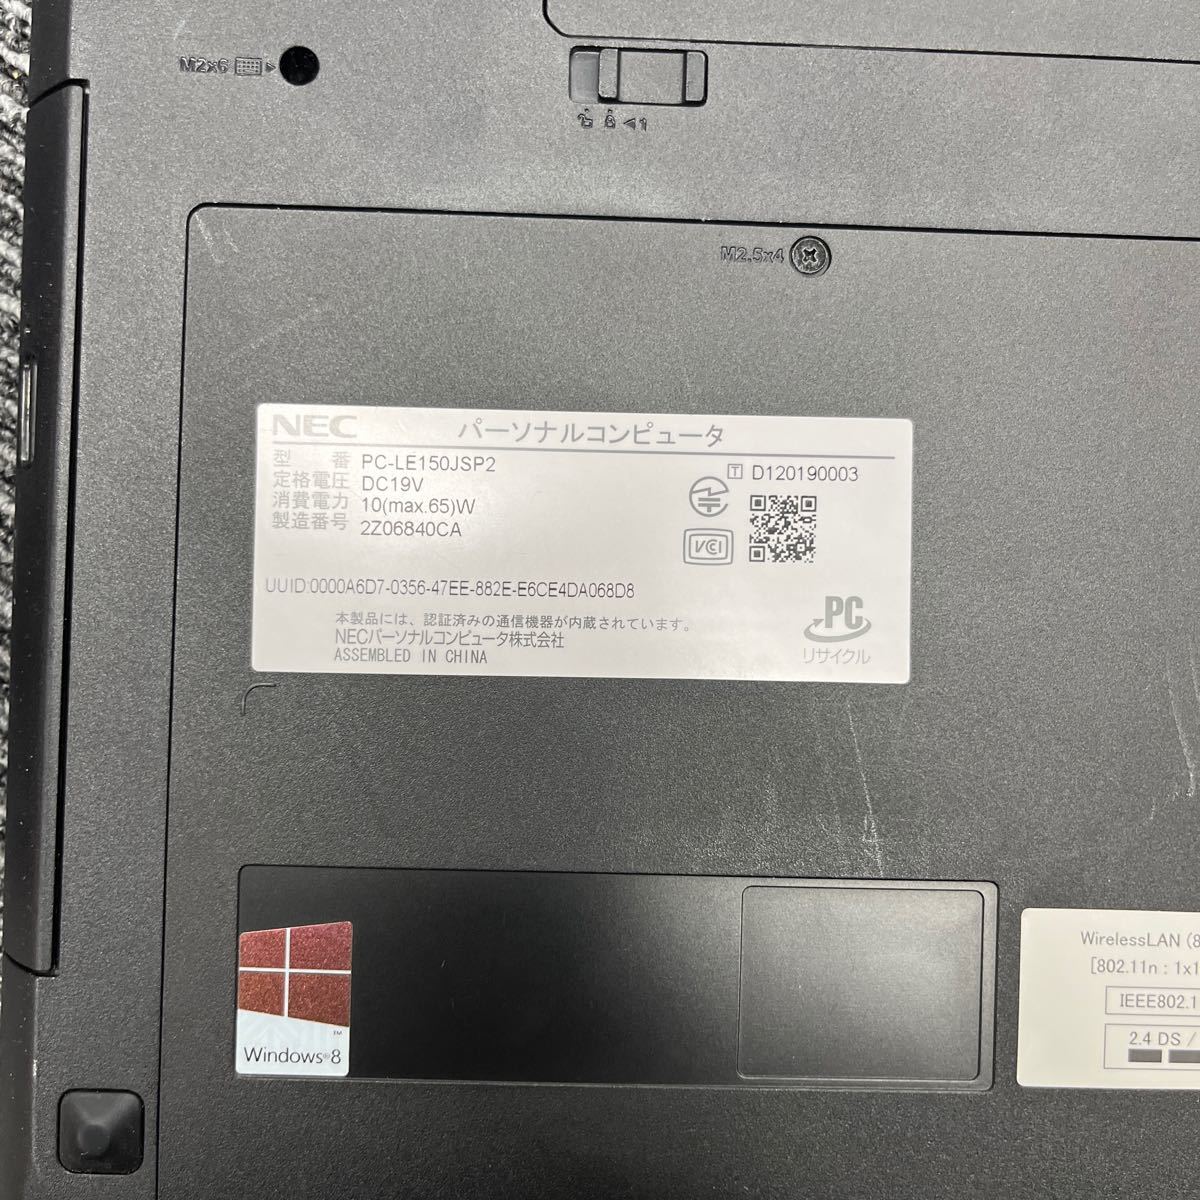 ※NEC パソコン パーソナルコンピュータ　型番PC-LE150JSP2_画像8